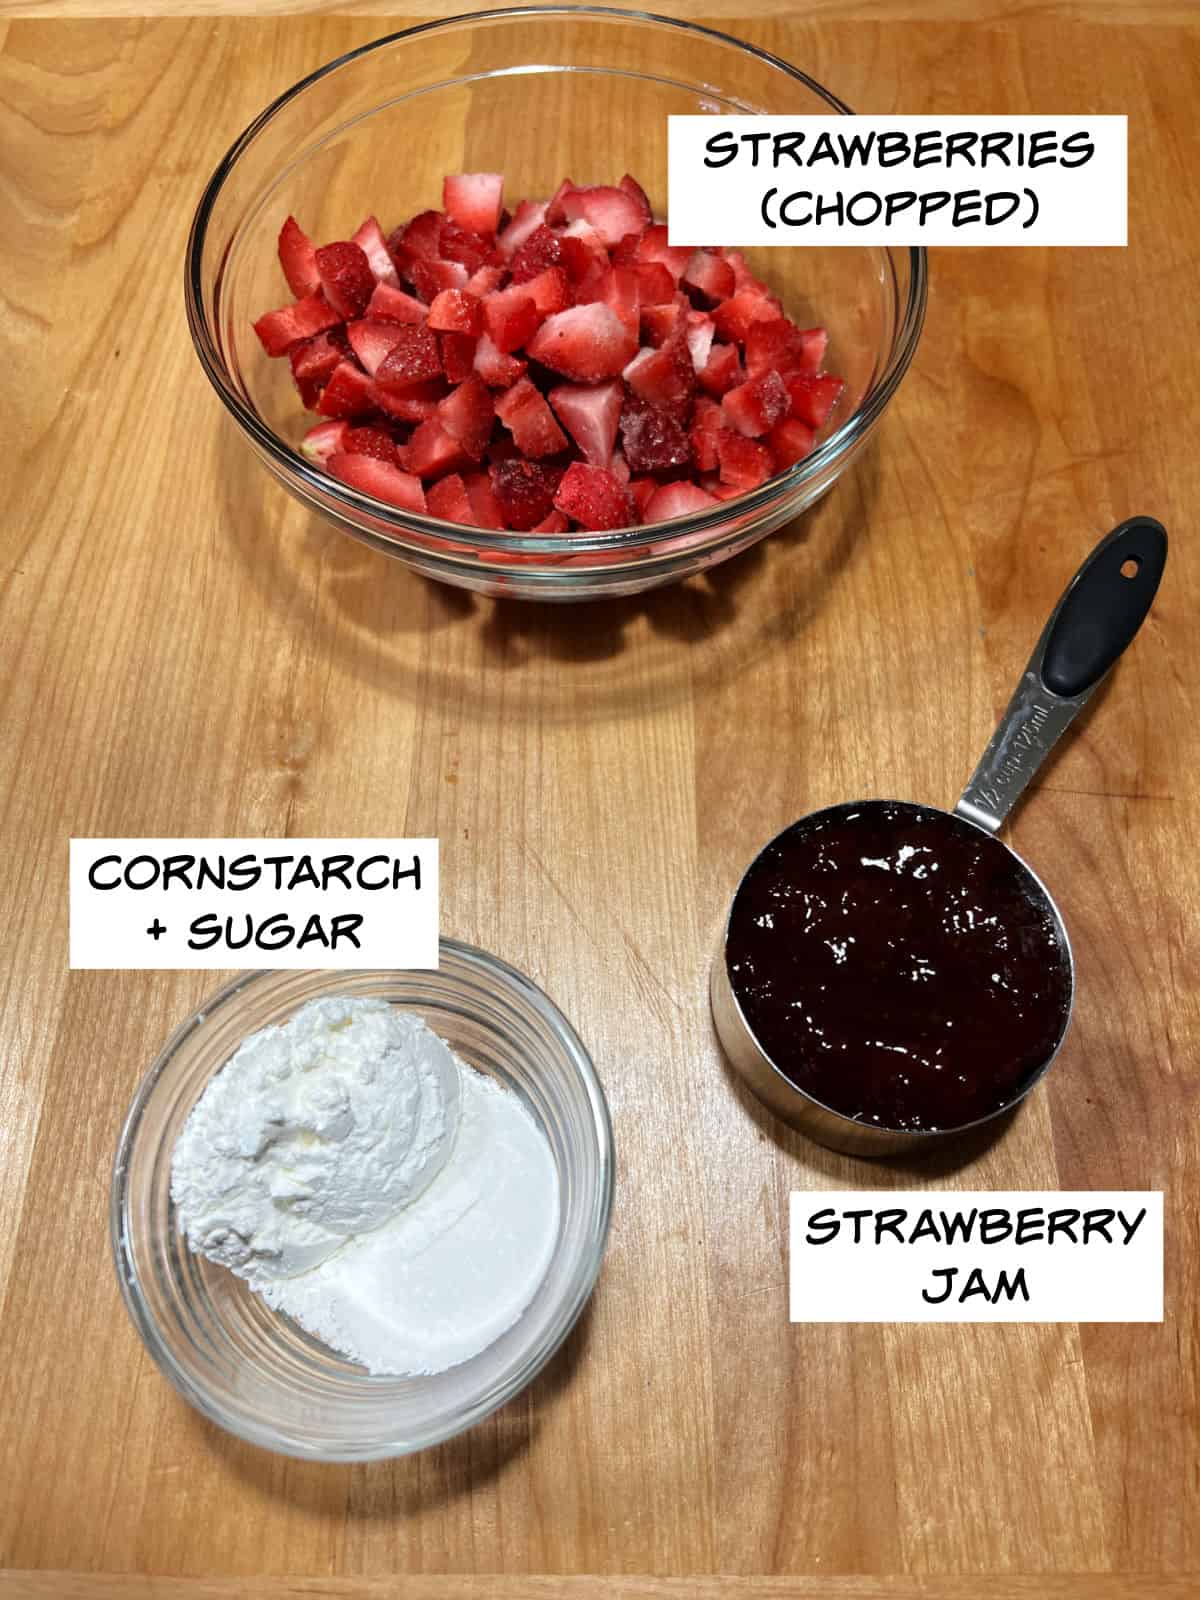 ingredients: strawberries, jam, cornstarch, and sugar.